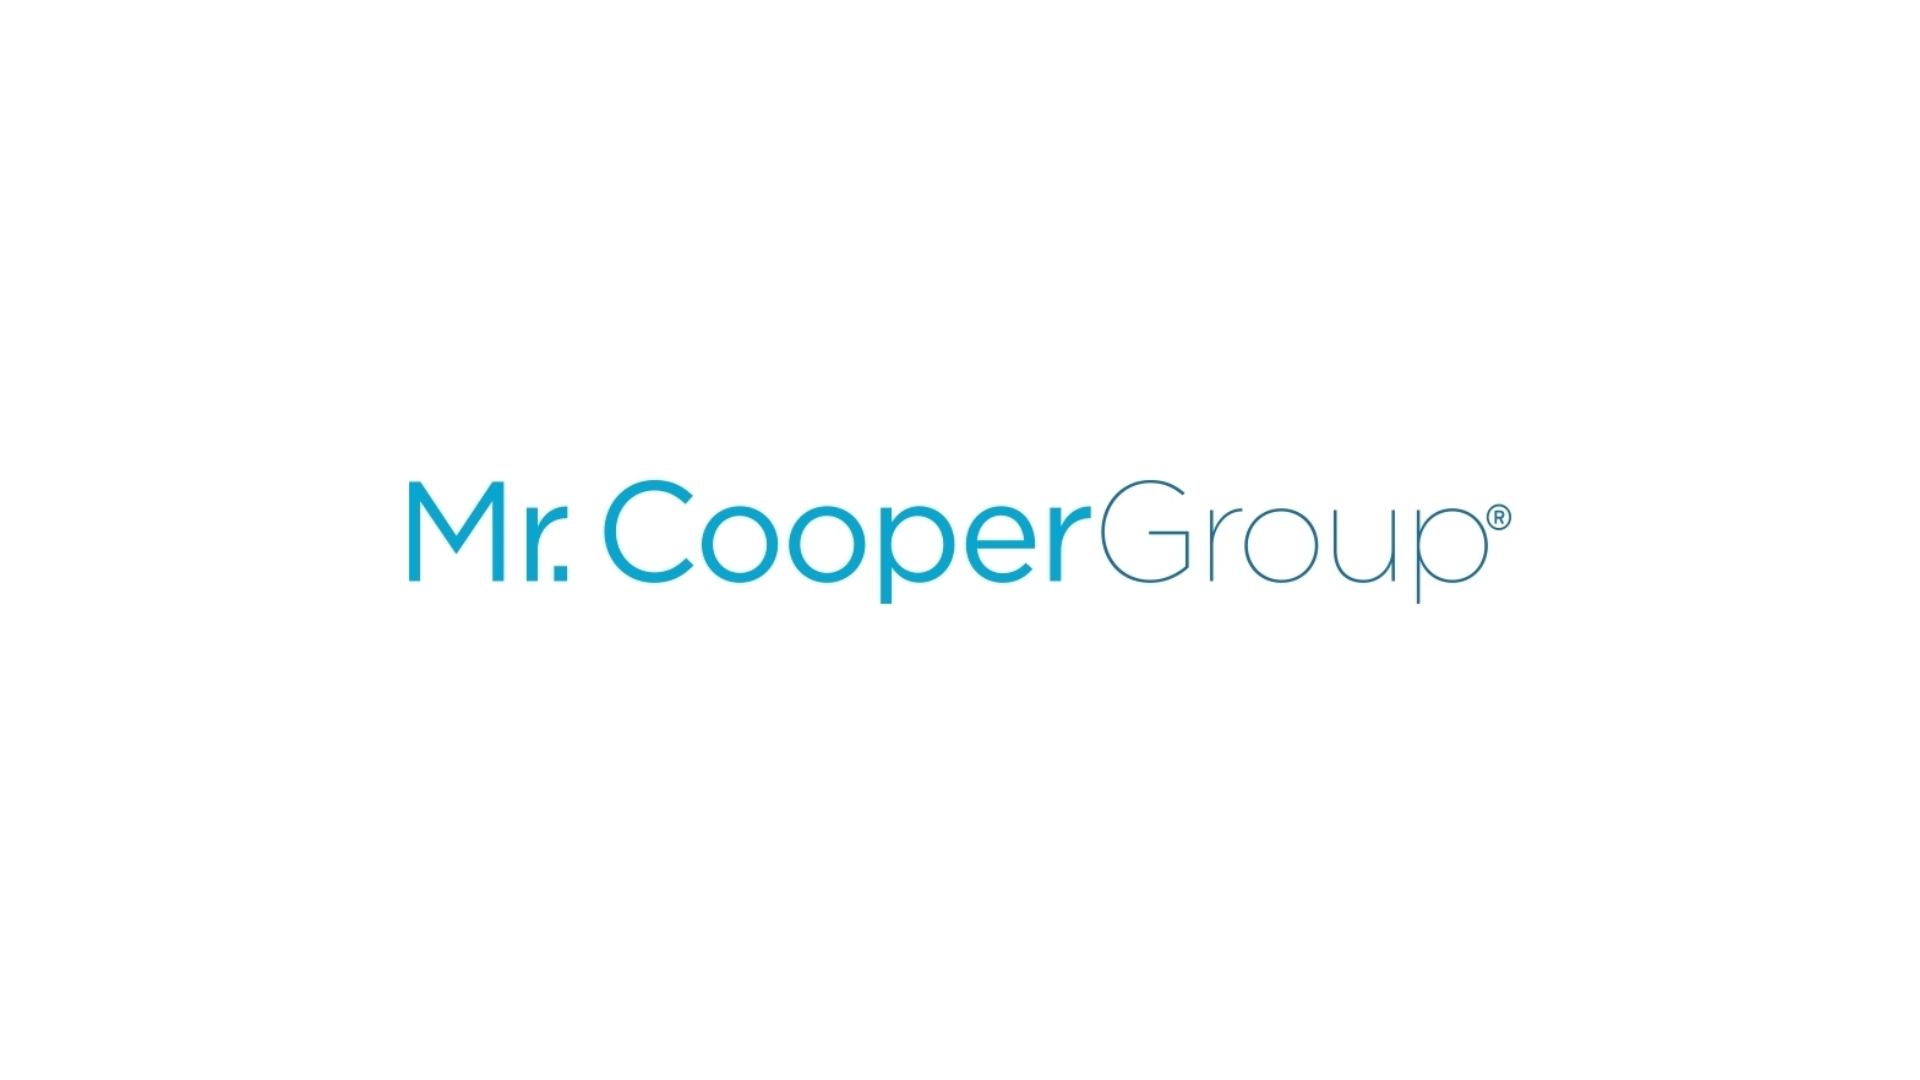 Mr. Cooper To Buy Flagstar's Mortgage Servicing, TPO Platform